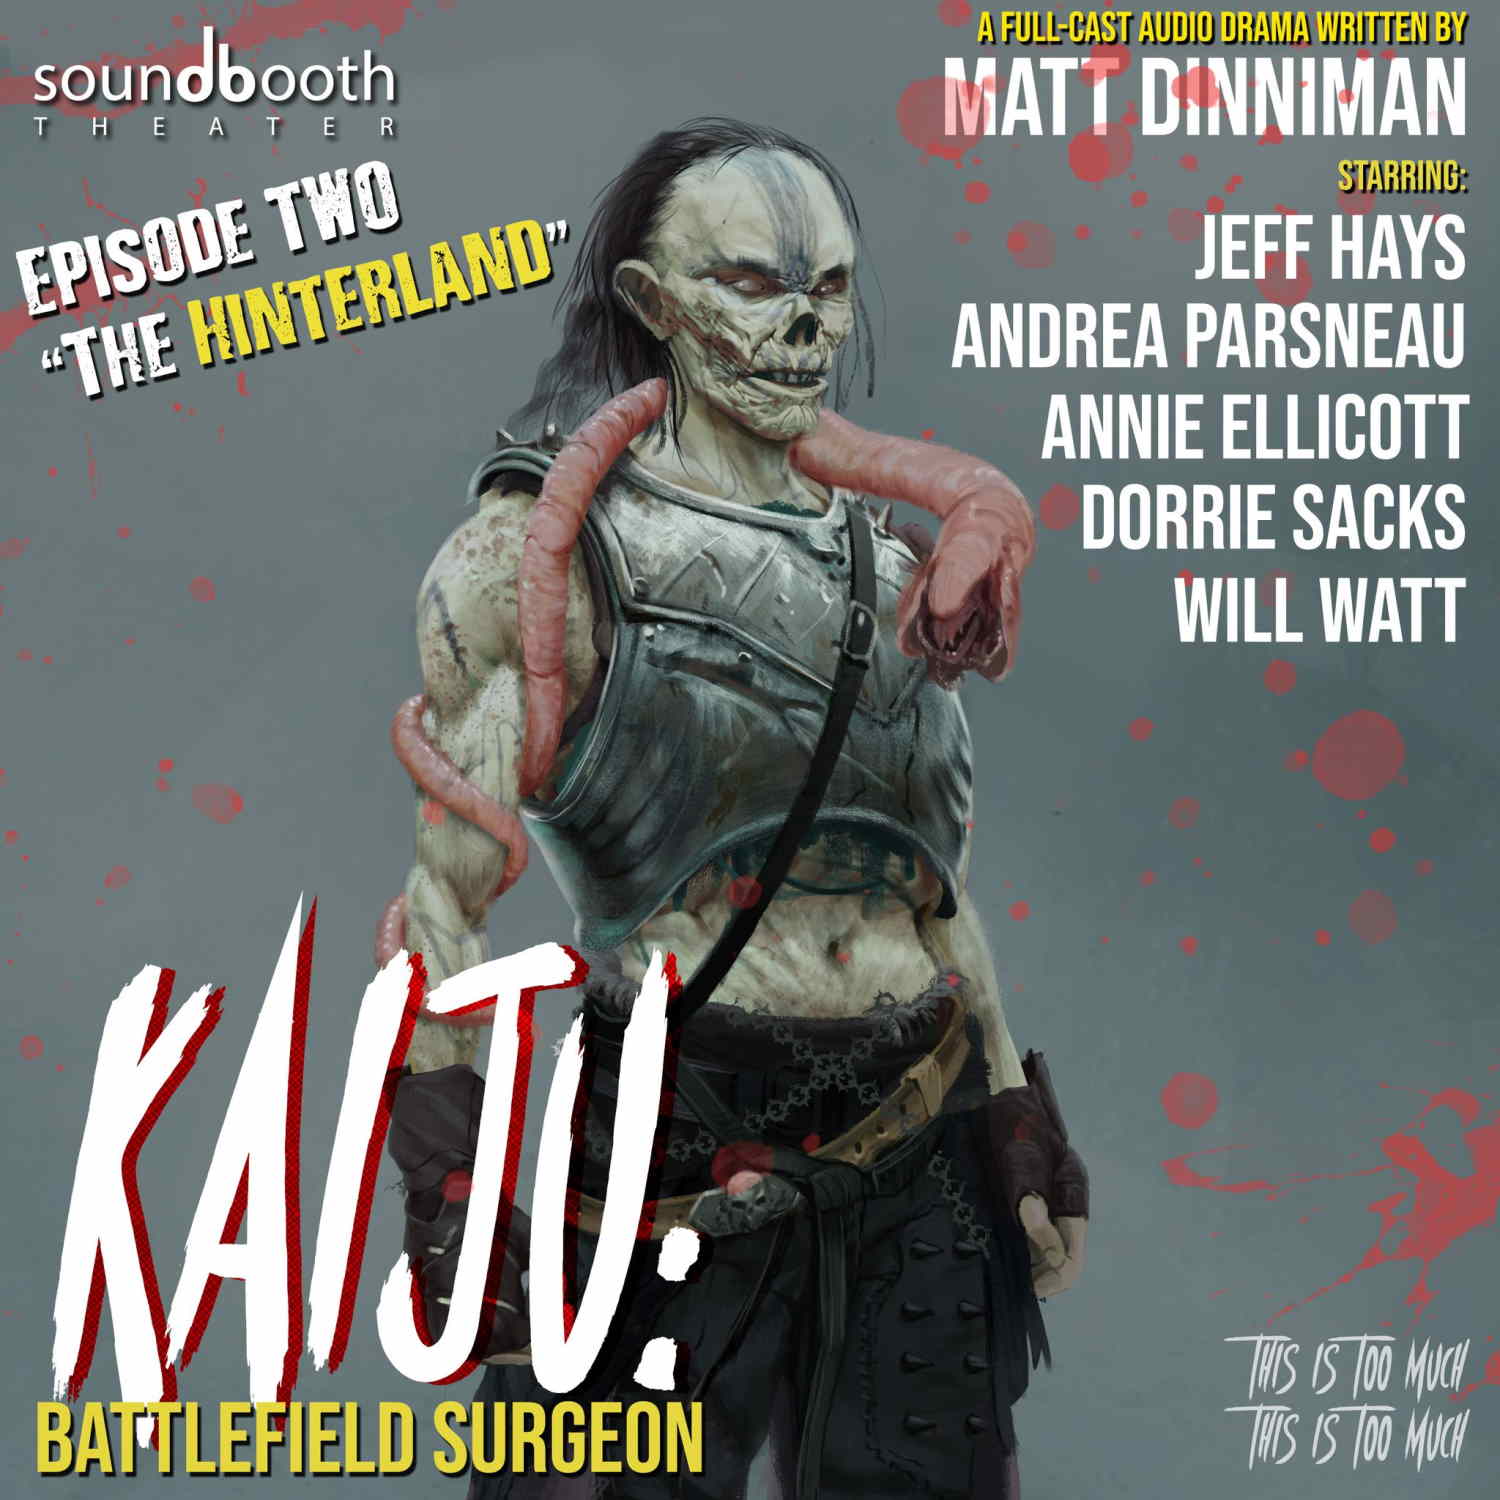 Kaiju Battlefield Surgeon; Episode Two, “The Hinterland” Cover Art